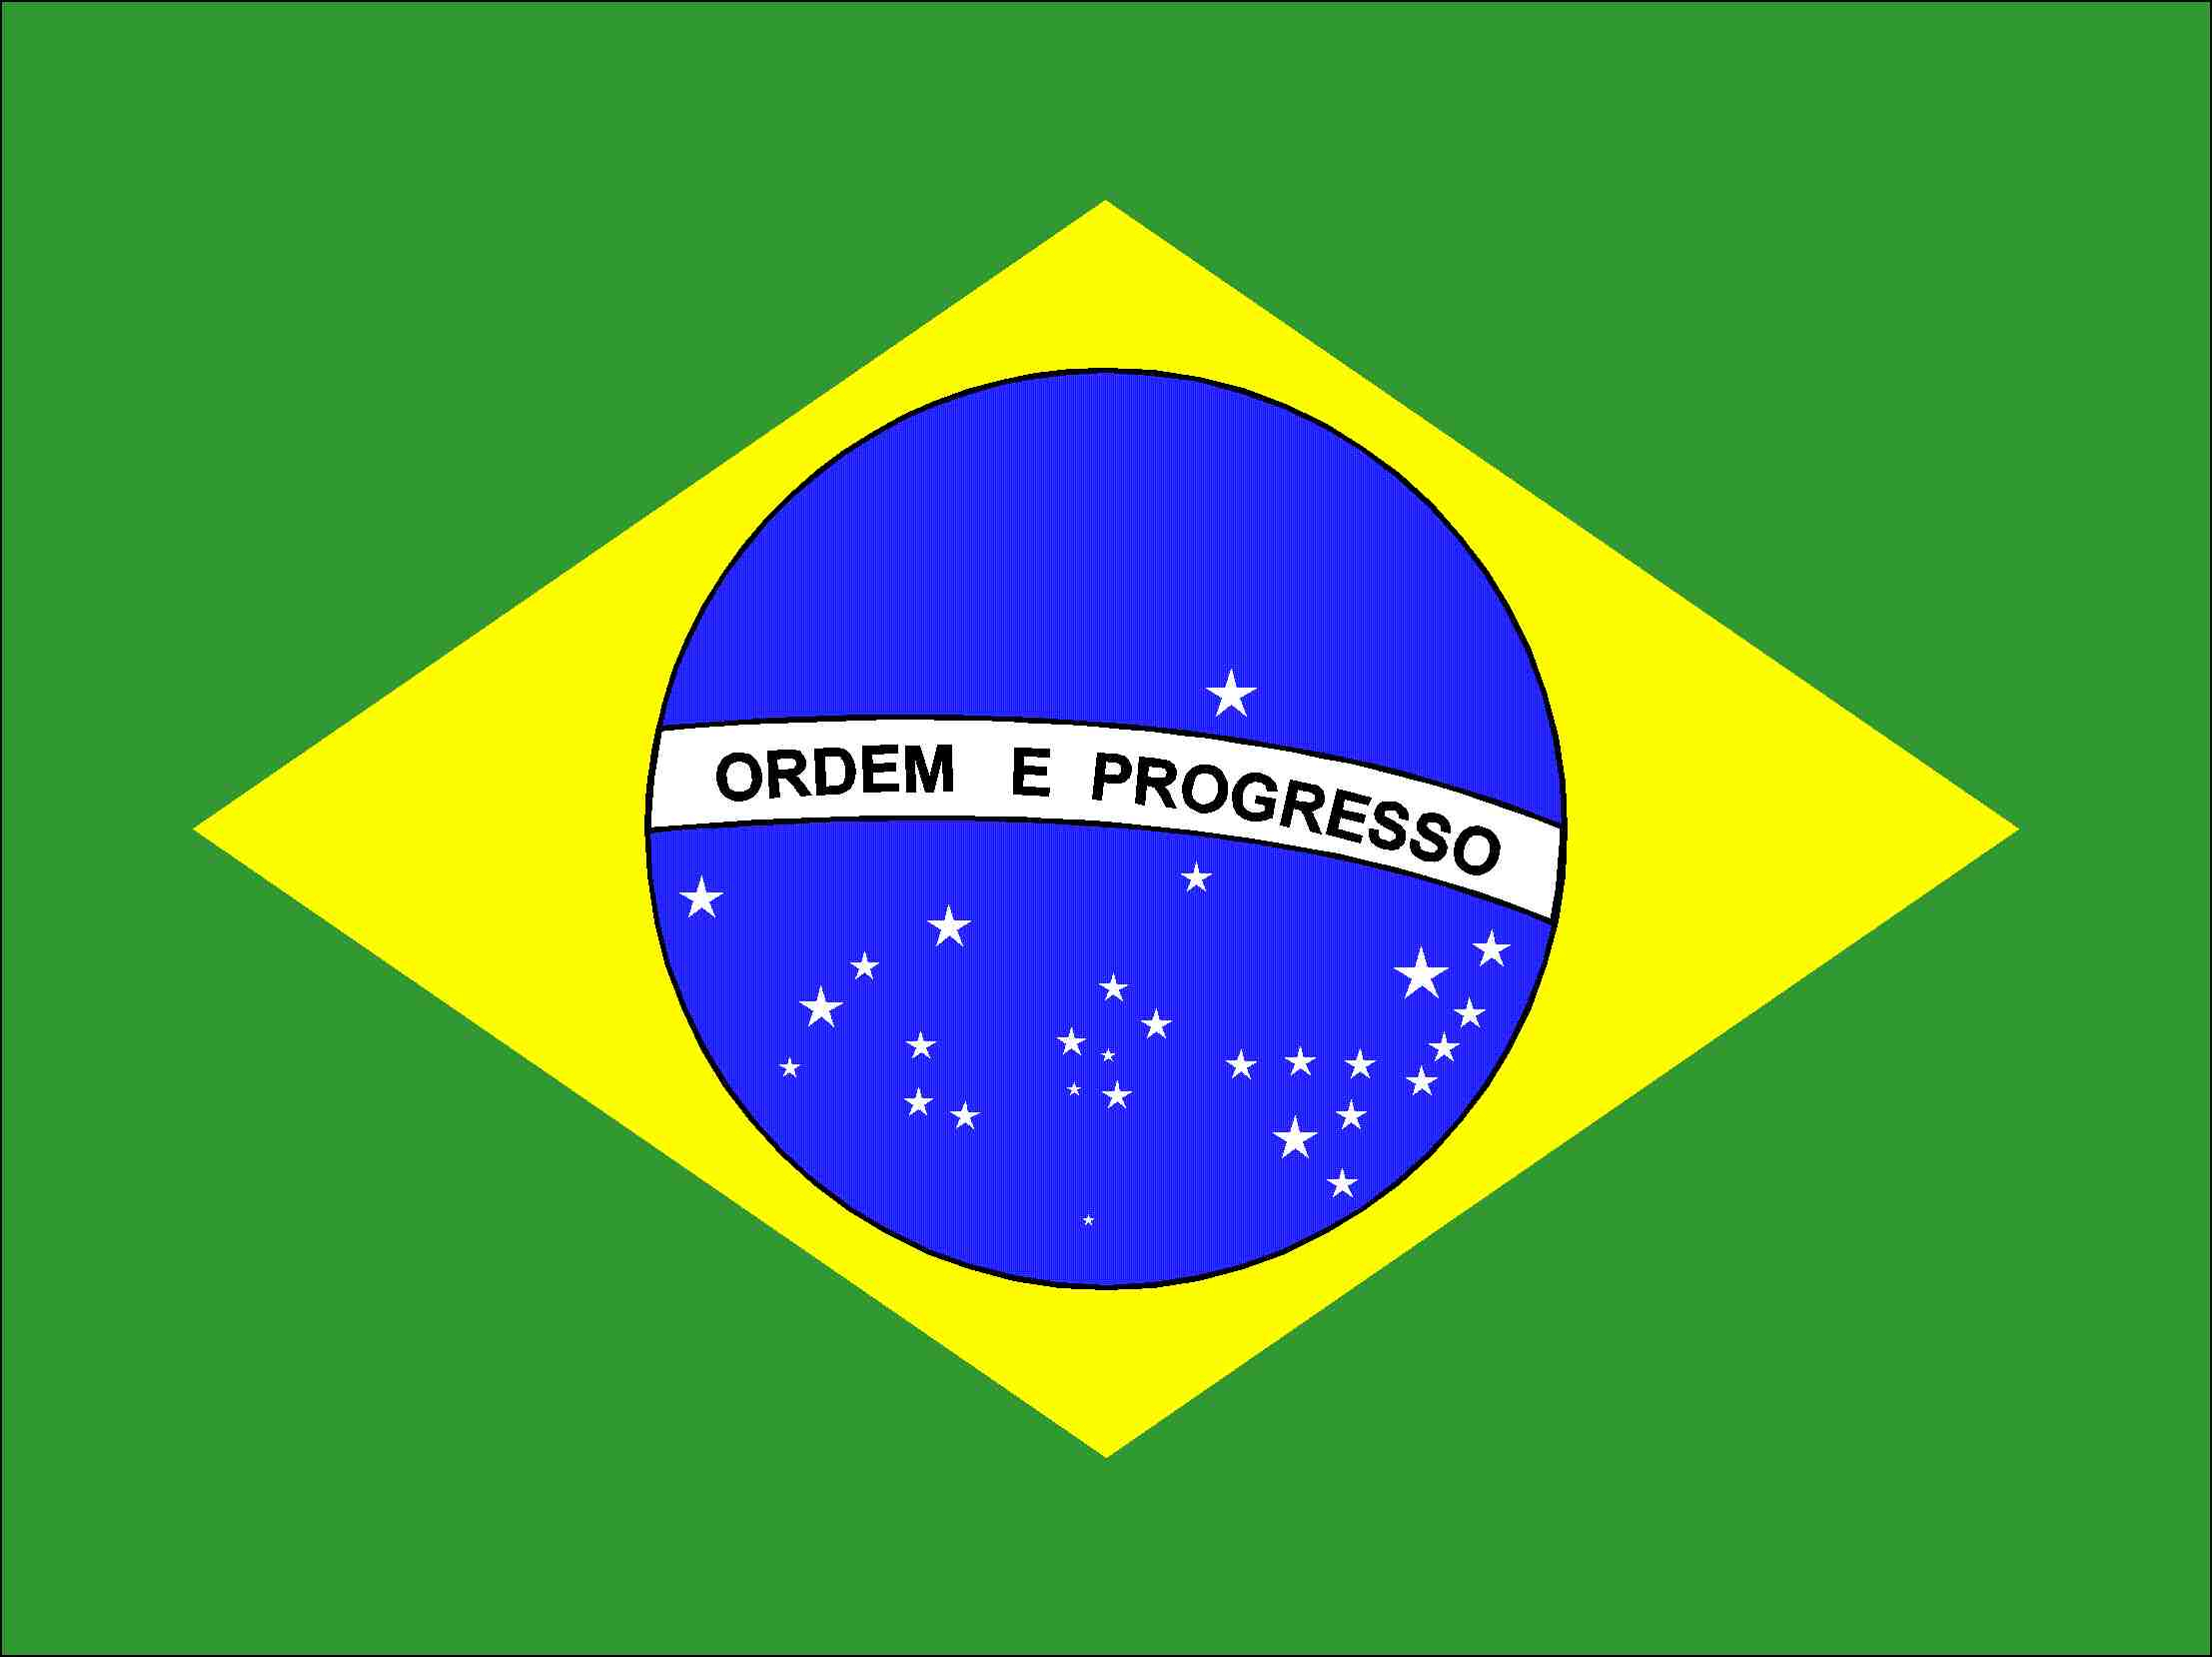 http://www.banderas.pro/banderas/bandera-brasil-8.jpg